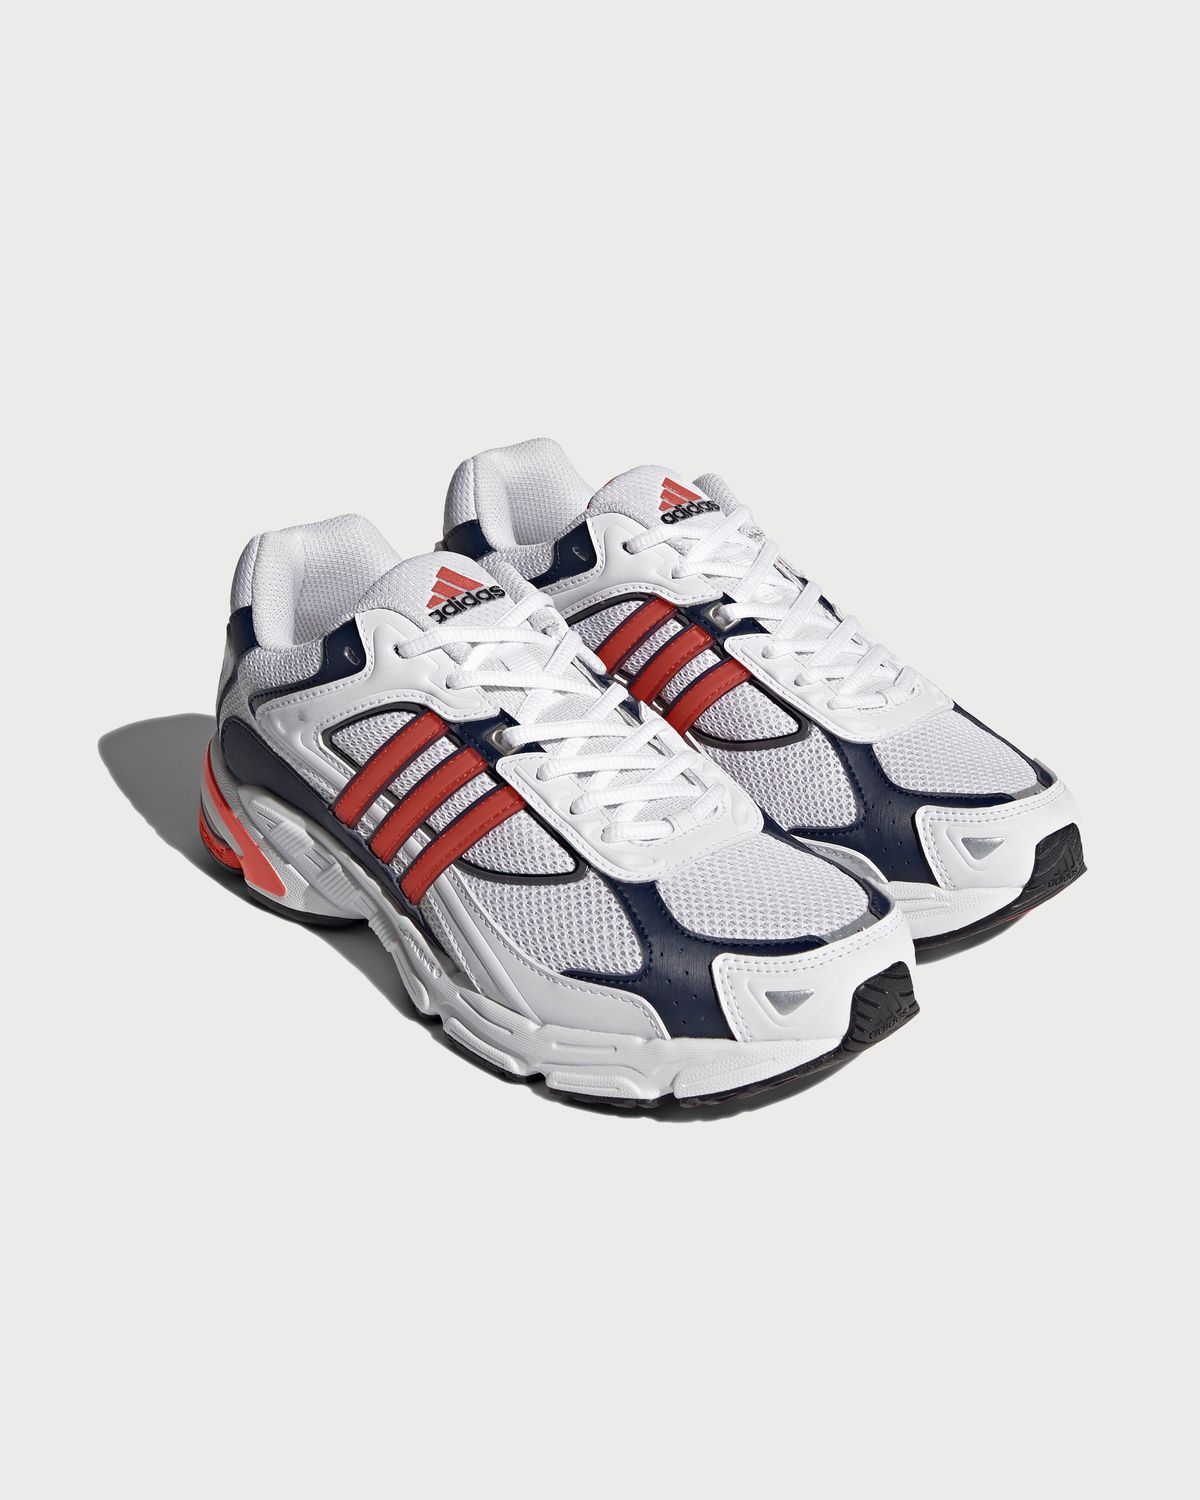 Adidas – Response CL White/Orange - Low Top Sneakers - White - Image 2